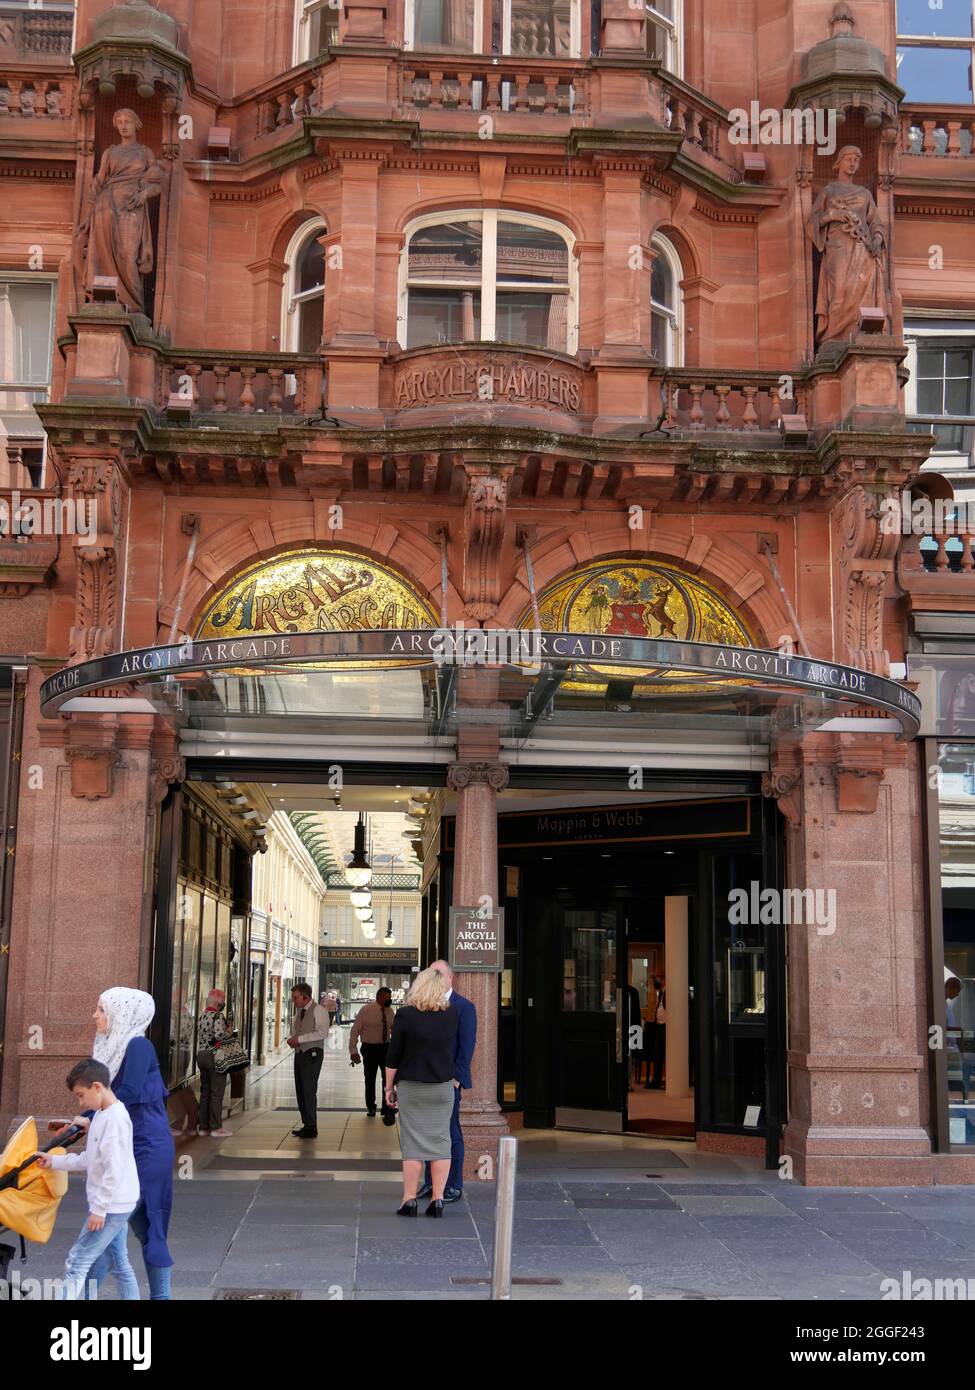 entrance to the Argyll Arcade, Buchanan Street,Glasgow city centre, Scotland,UK Stock Photo